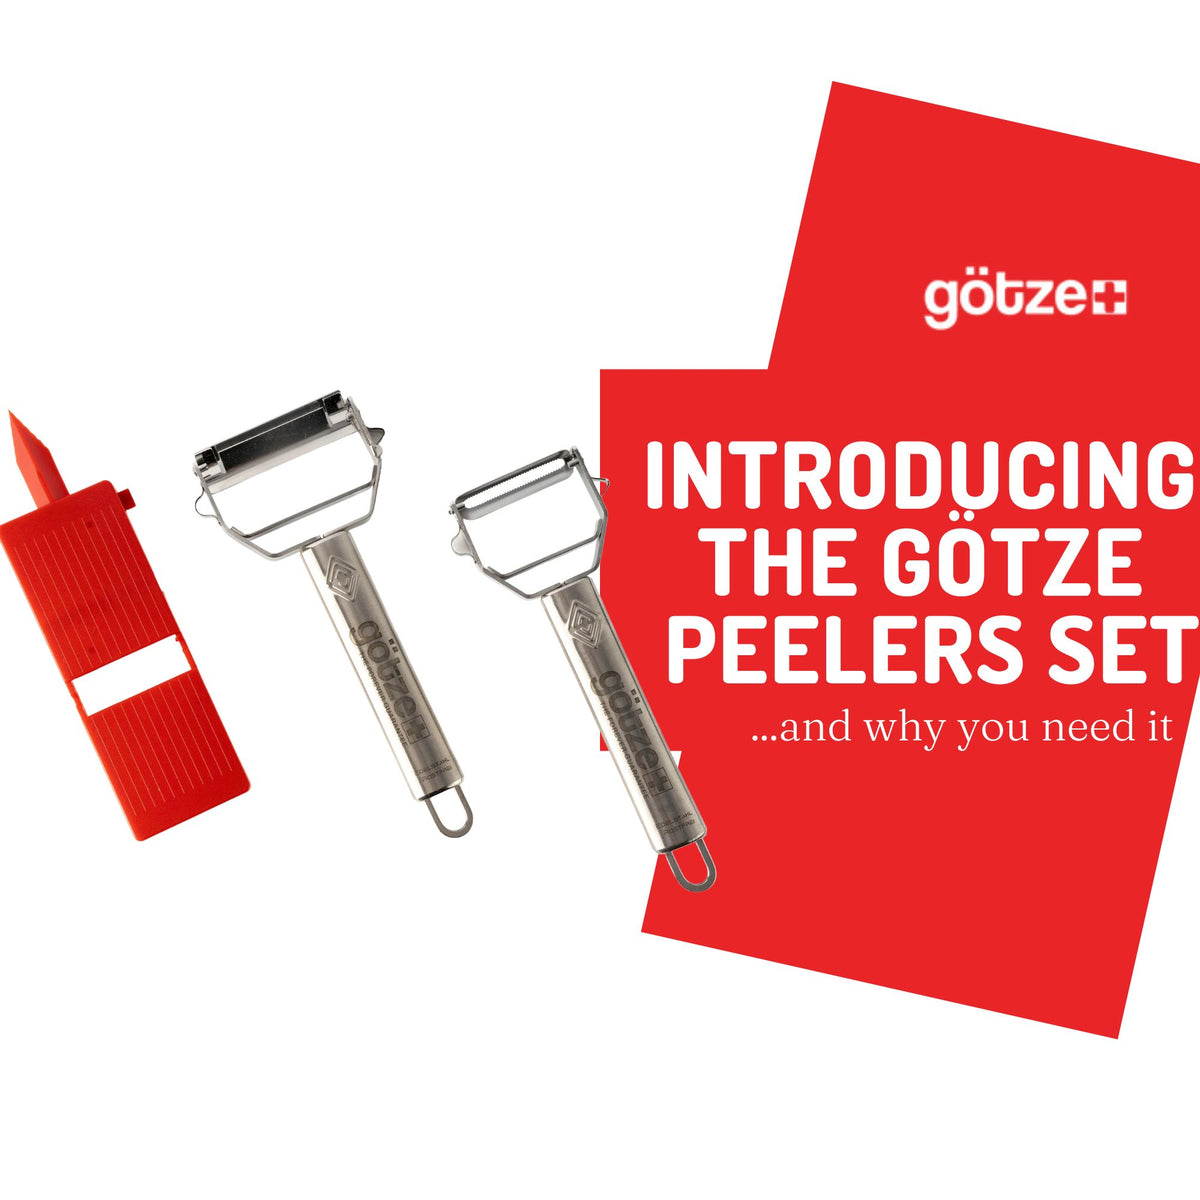 Gotze - The Forever Guarantee